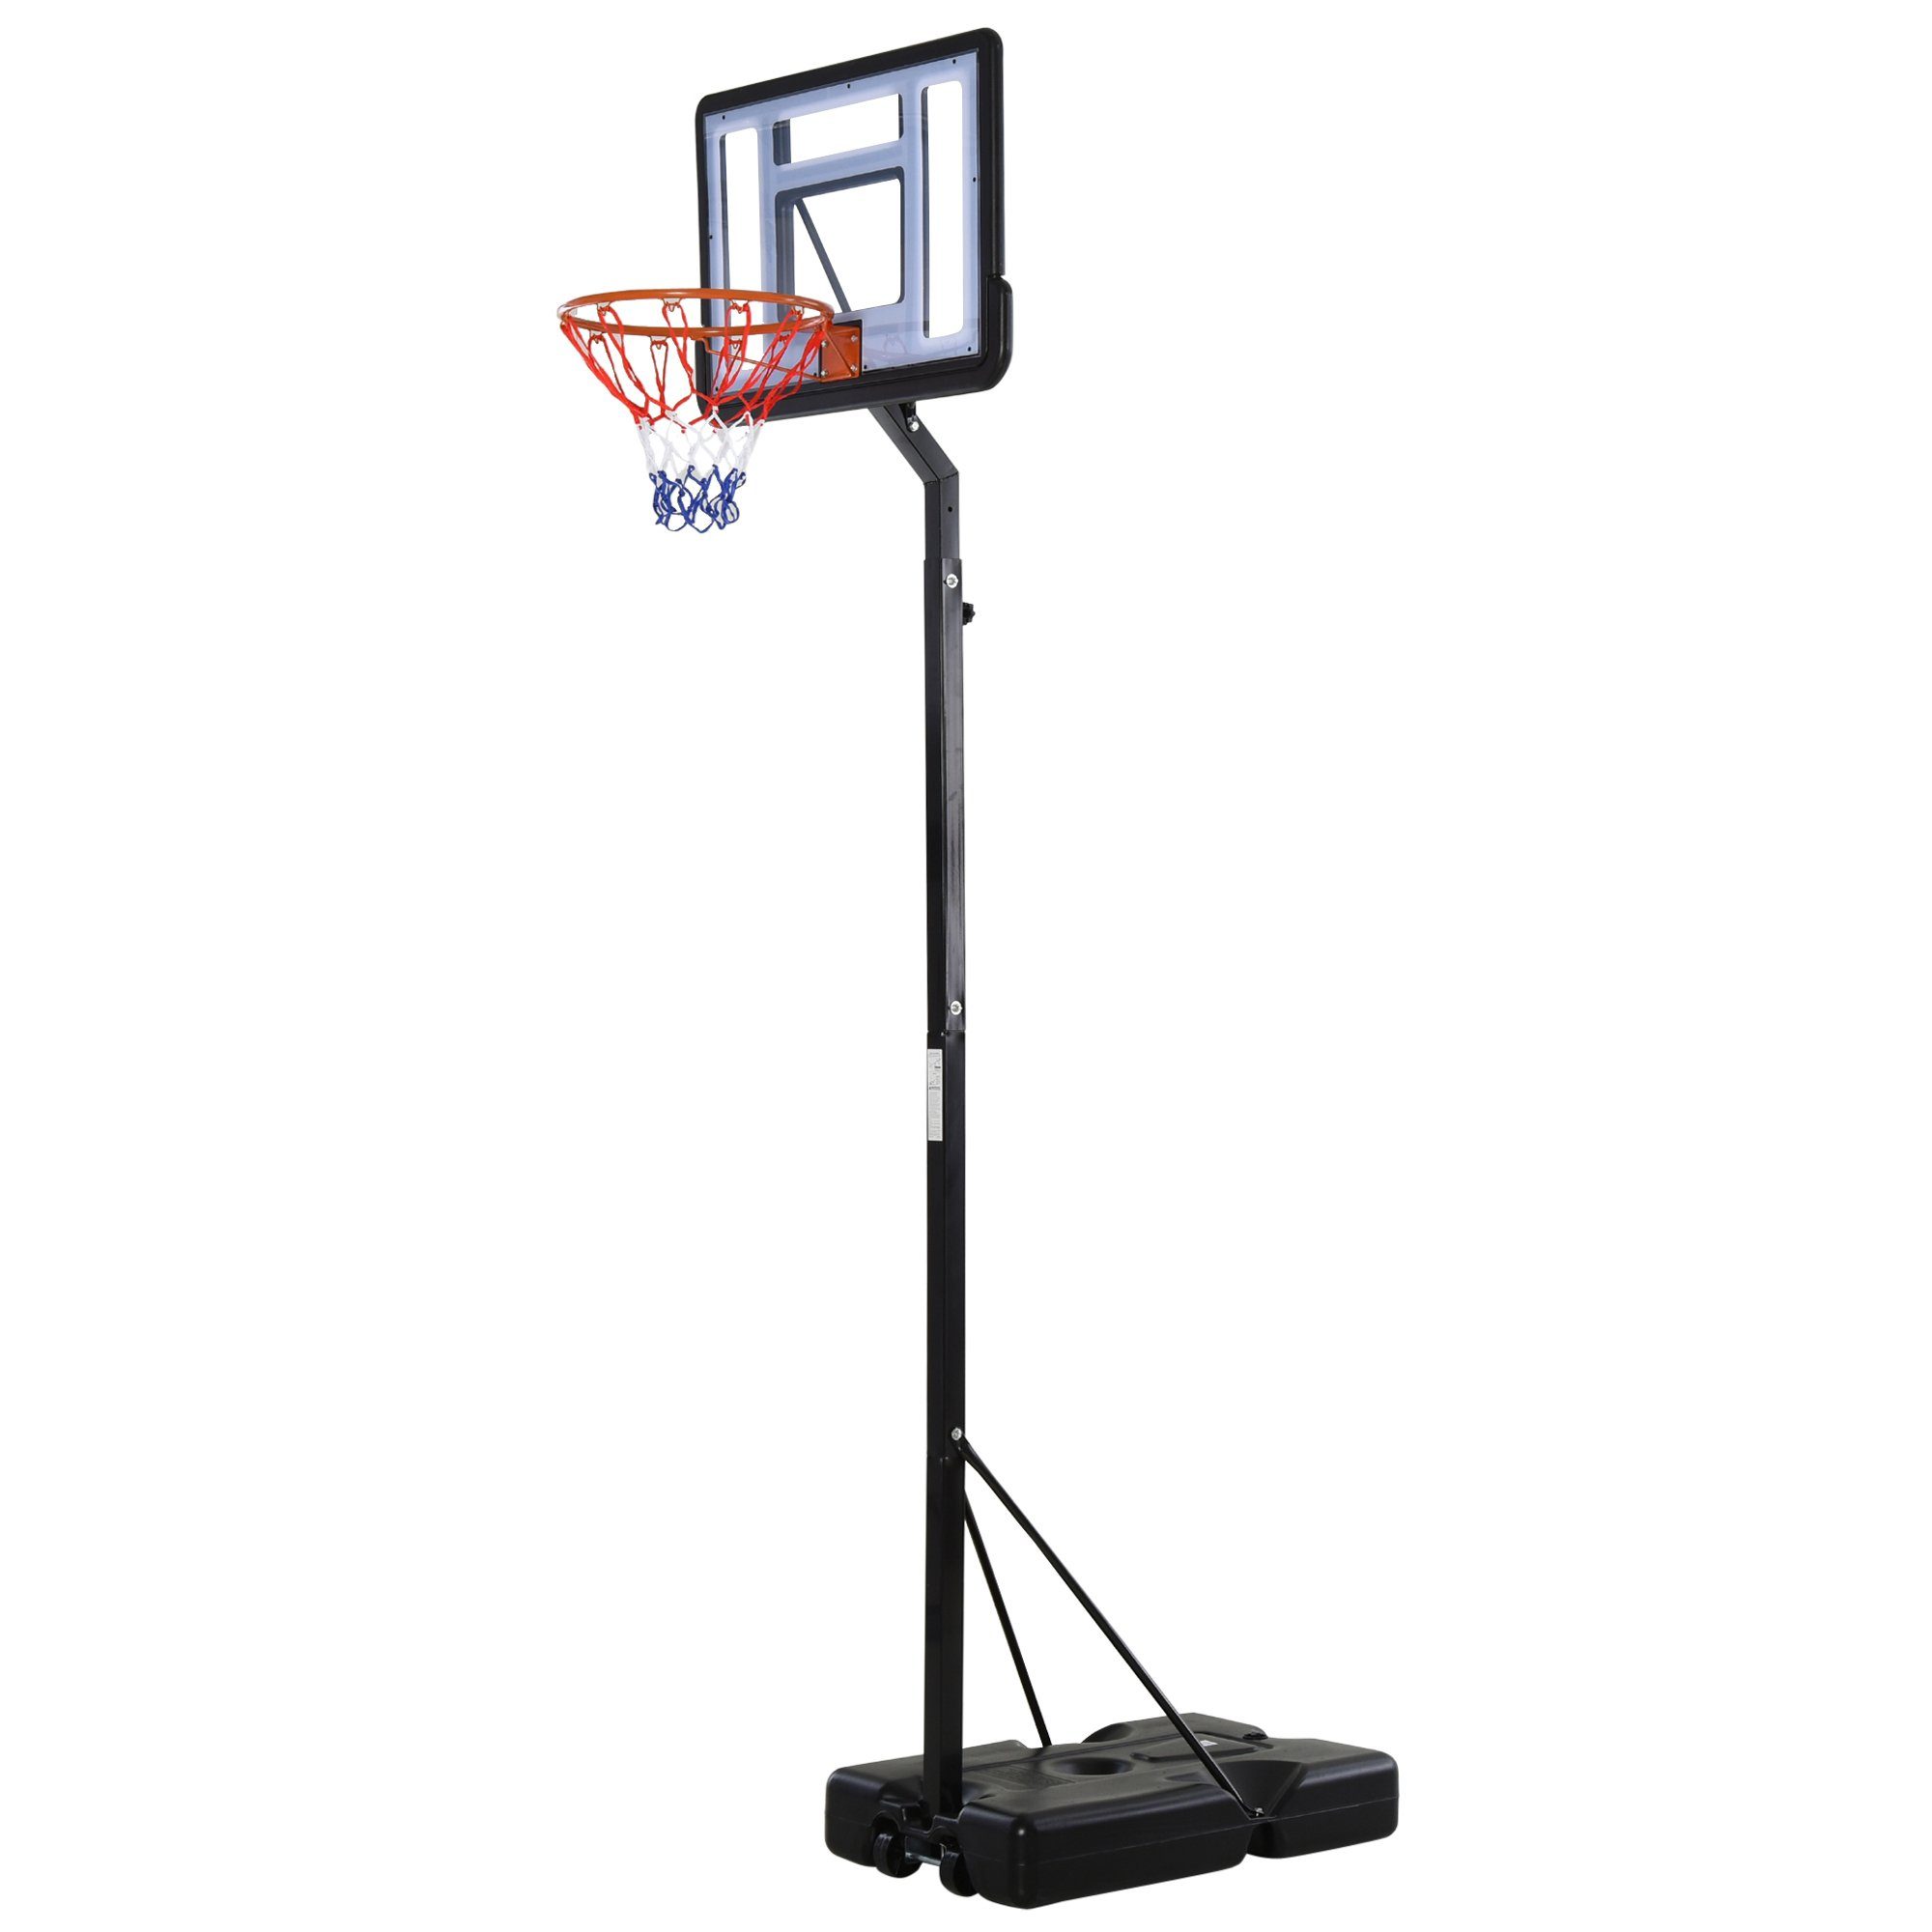 HOMCOM Basketballständer Basketballkorb mit 2 Rädern | Basketballkörbe